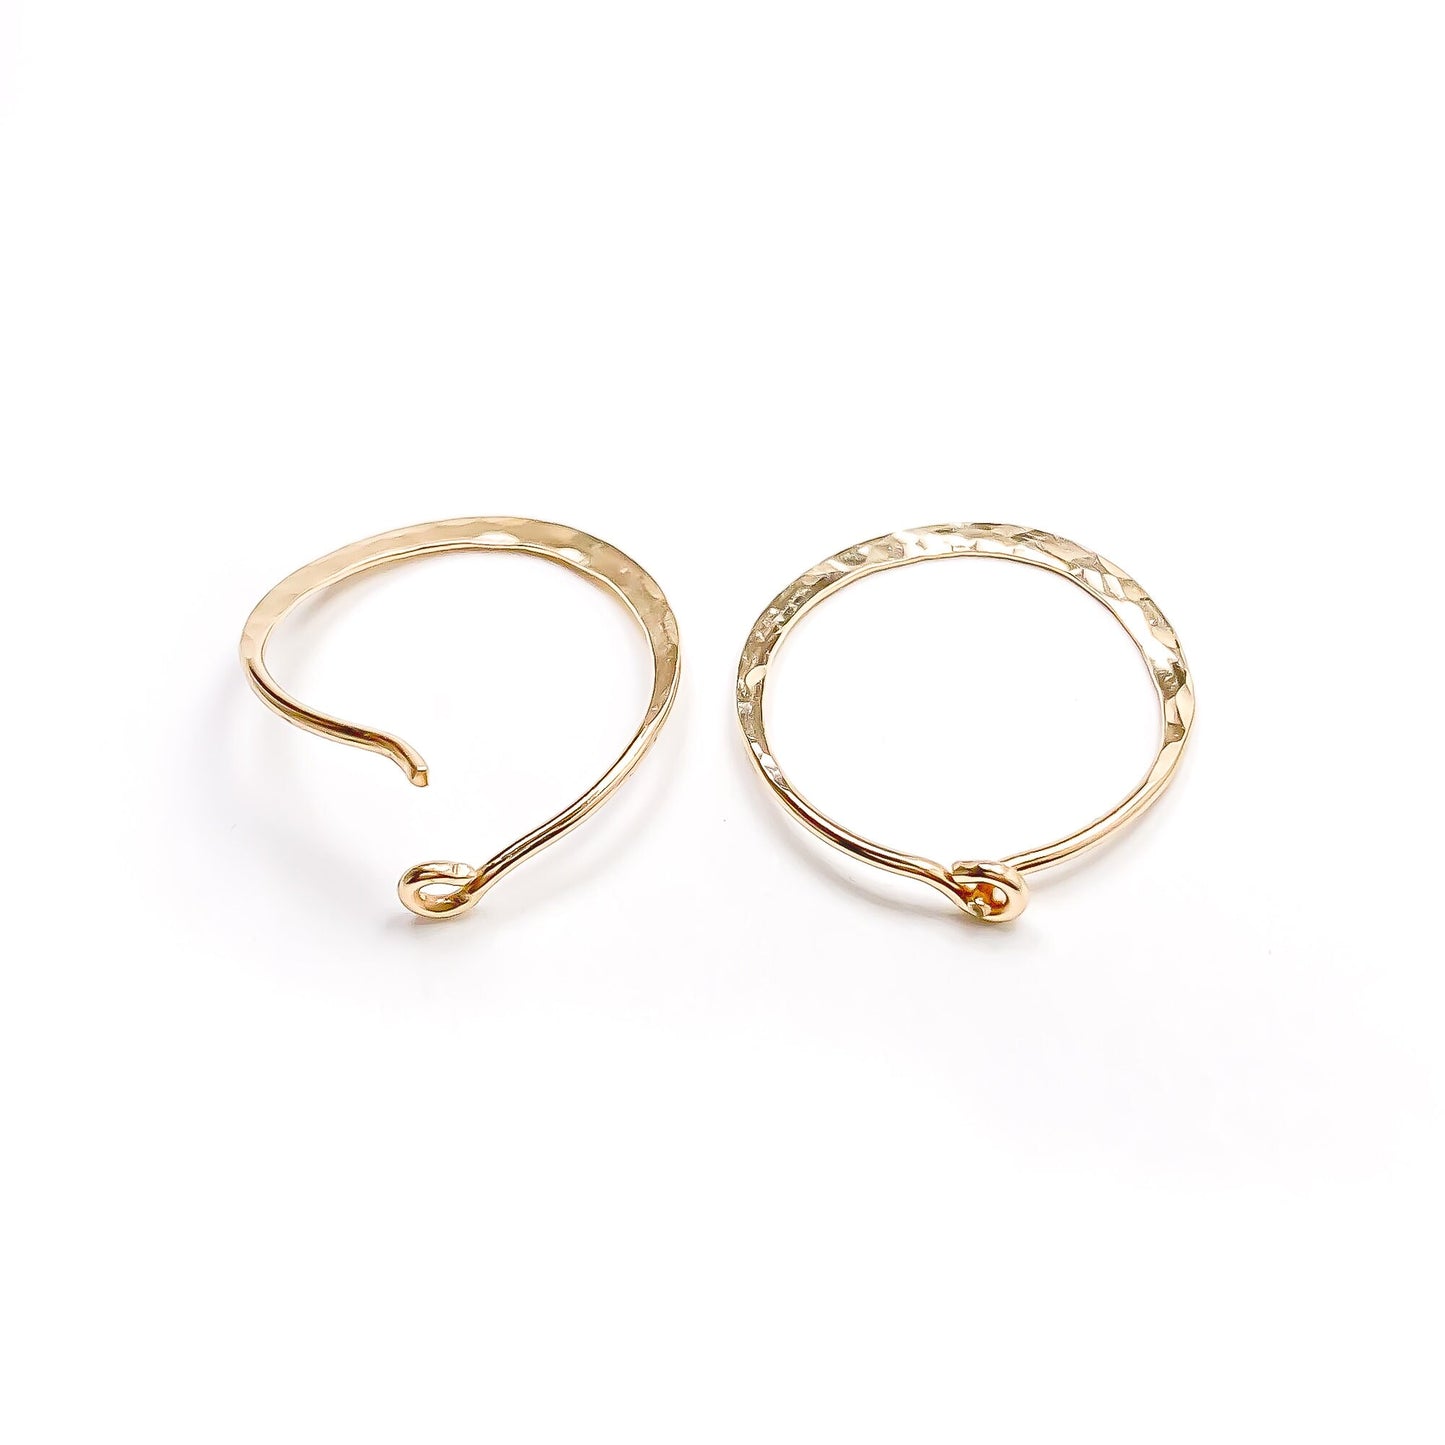 15mm Hammered Hoop Earrings, 14K Gold Filled